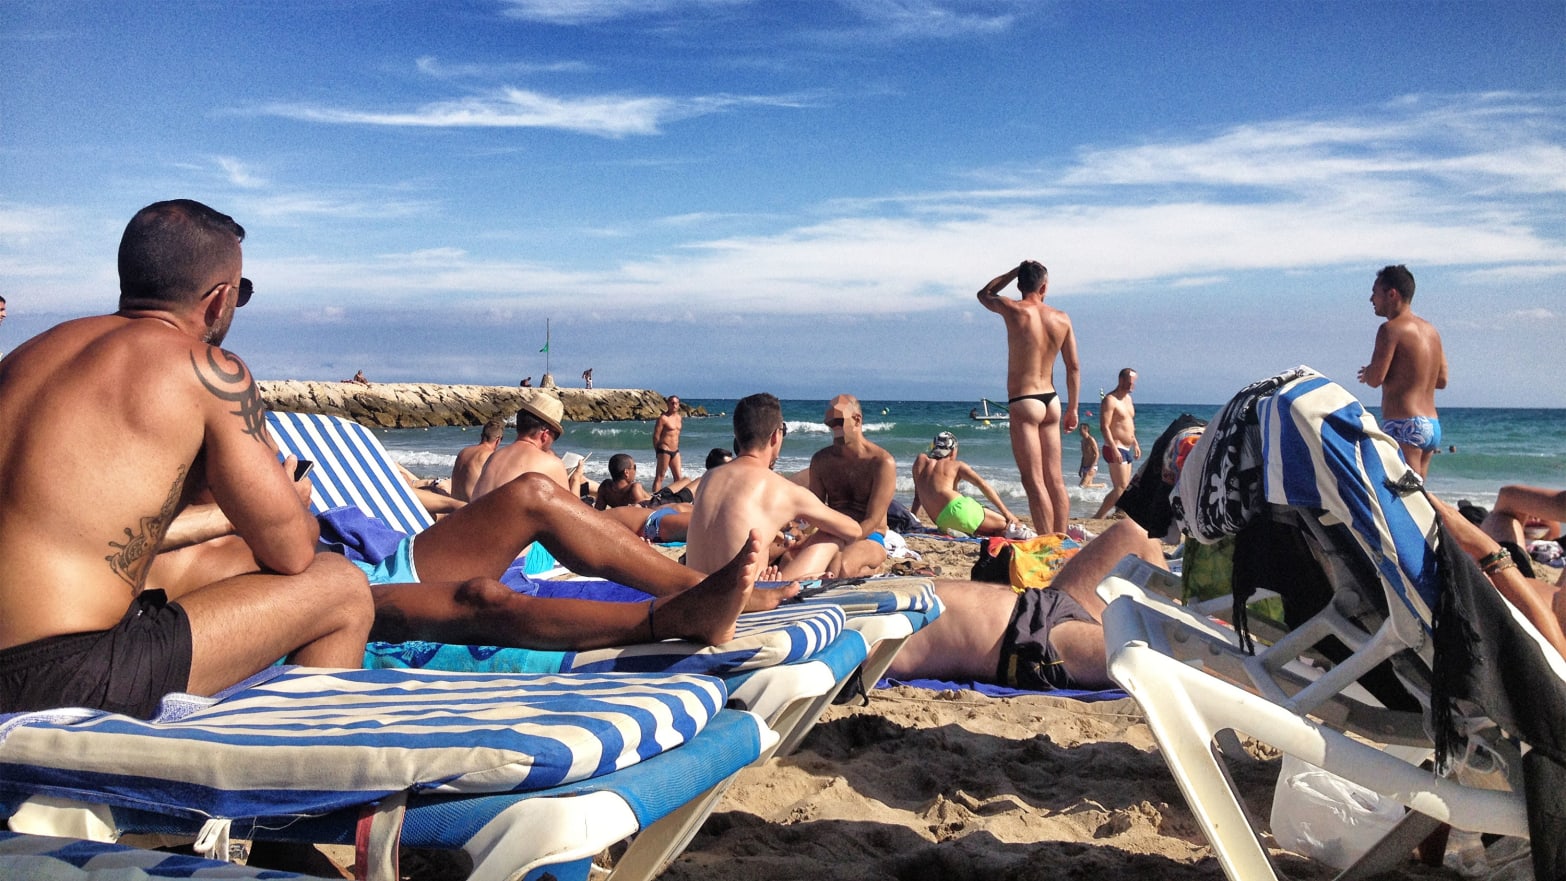 Public Bath Nudist - Balmins: Best Nude Beach in the World